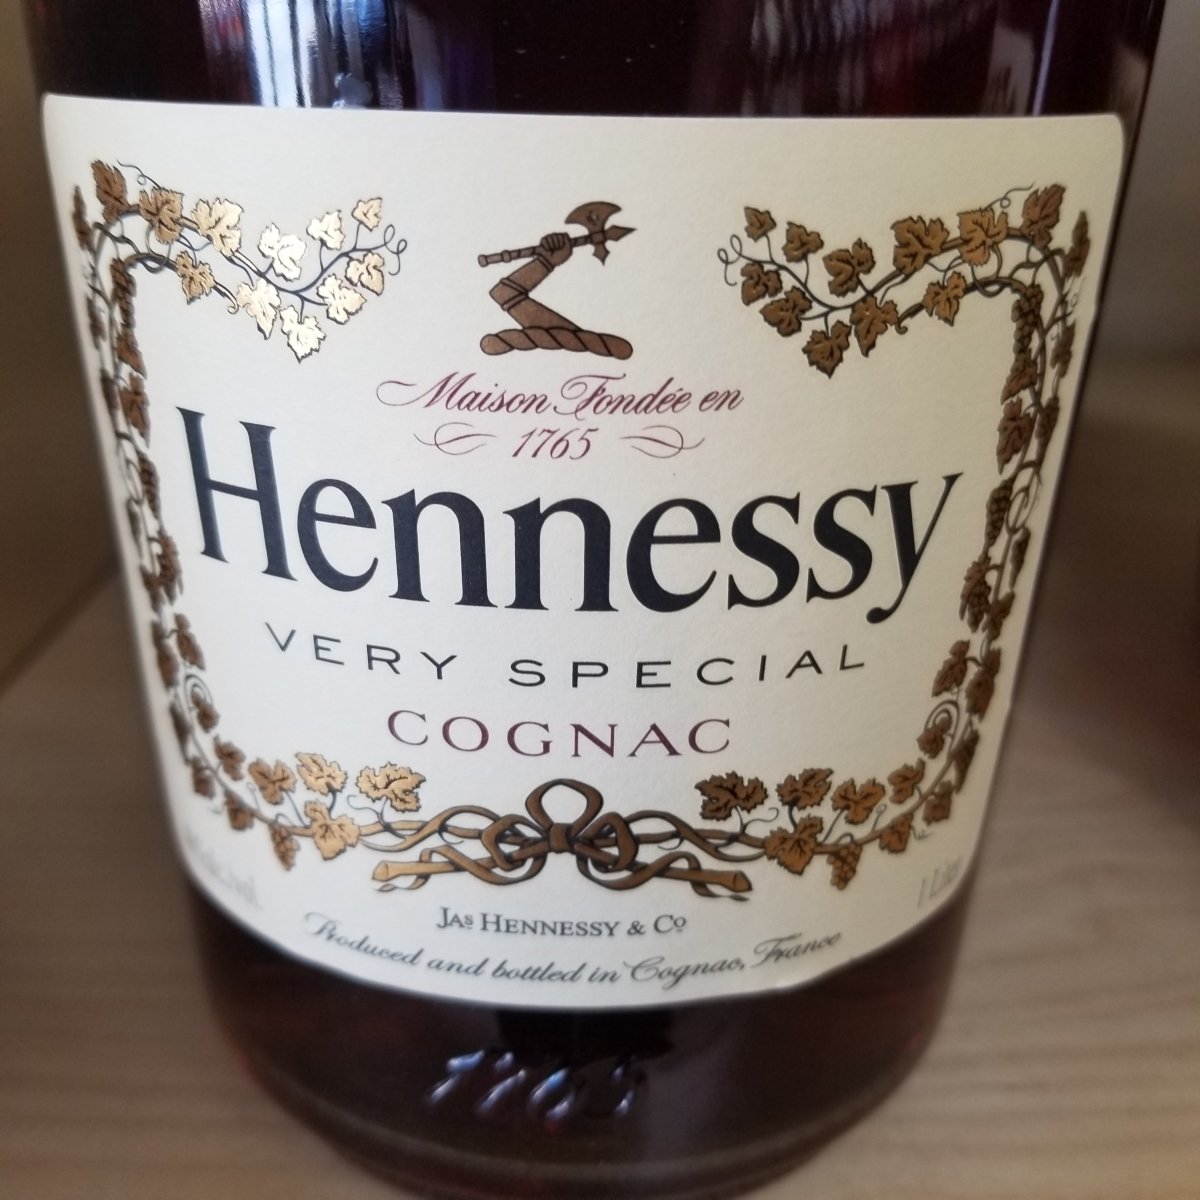 Hennessy Very Special Cognac in Bottle - 1.75 Liter - Safeway